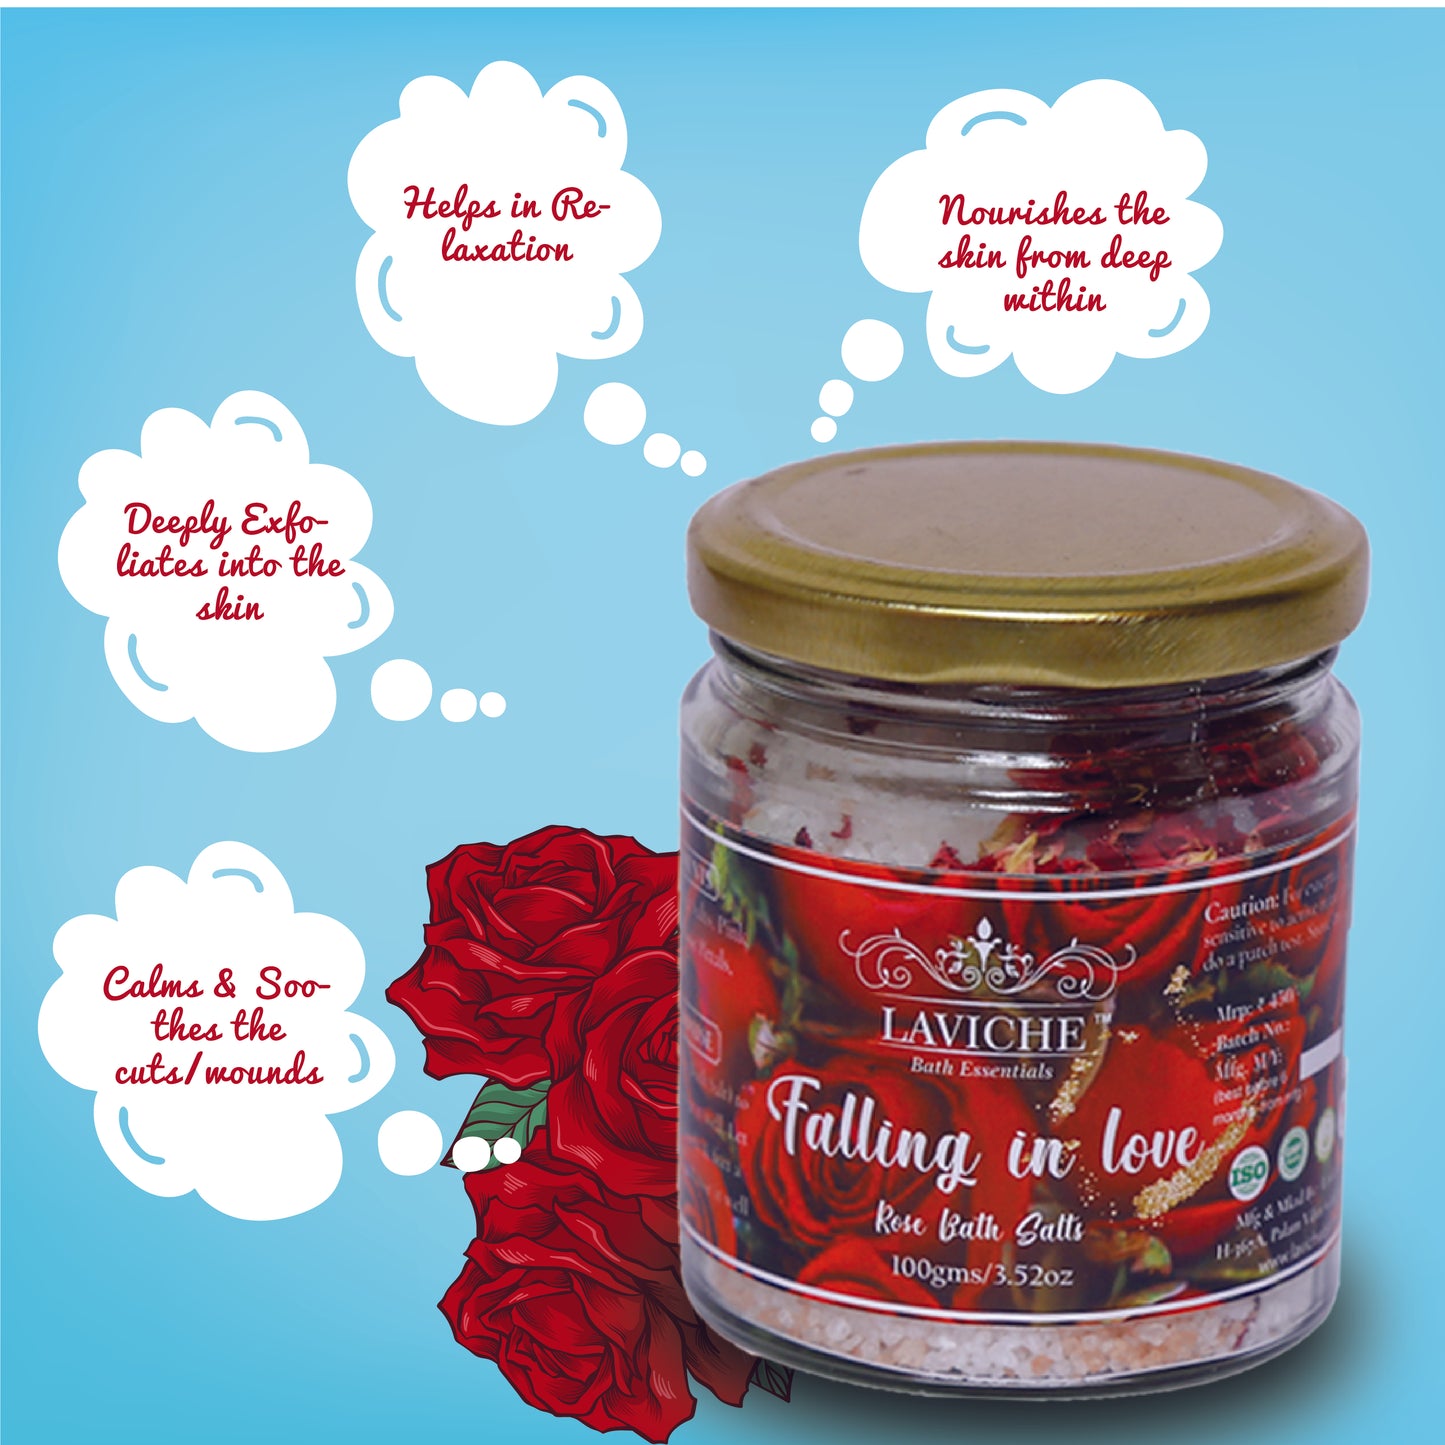 "Falling in Love" Rose Bath Salts